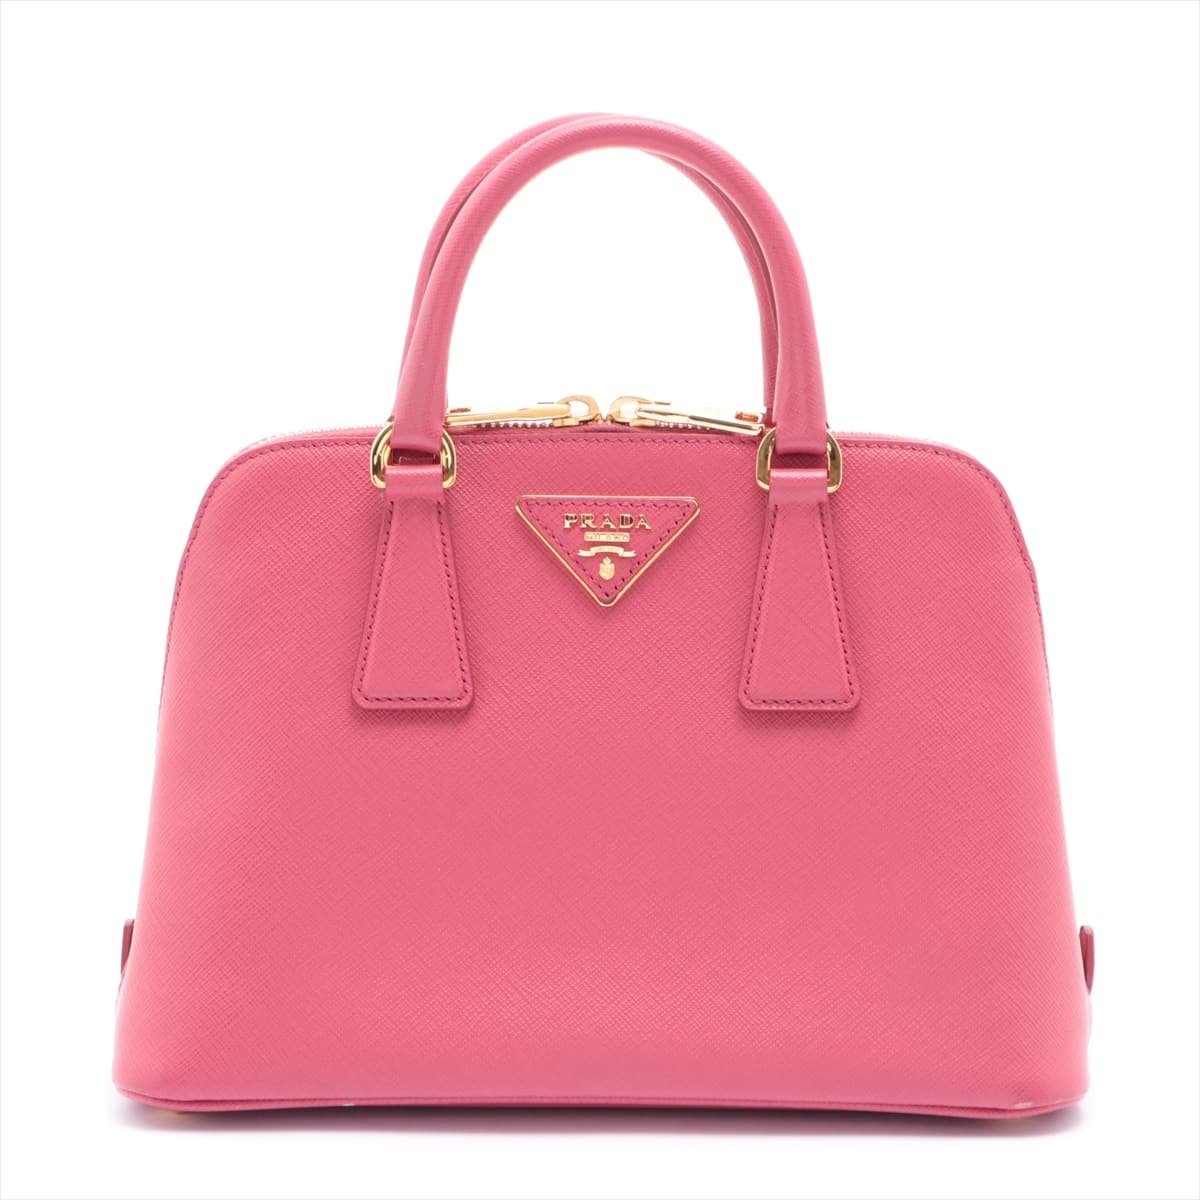 Prada Saffiano Lux 2way handbag Pink BL0838